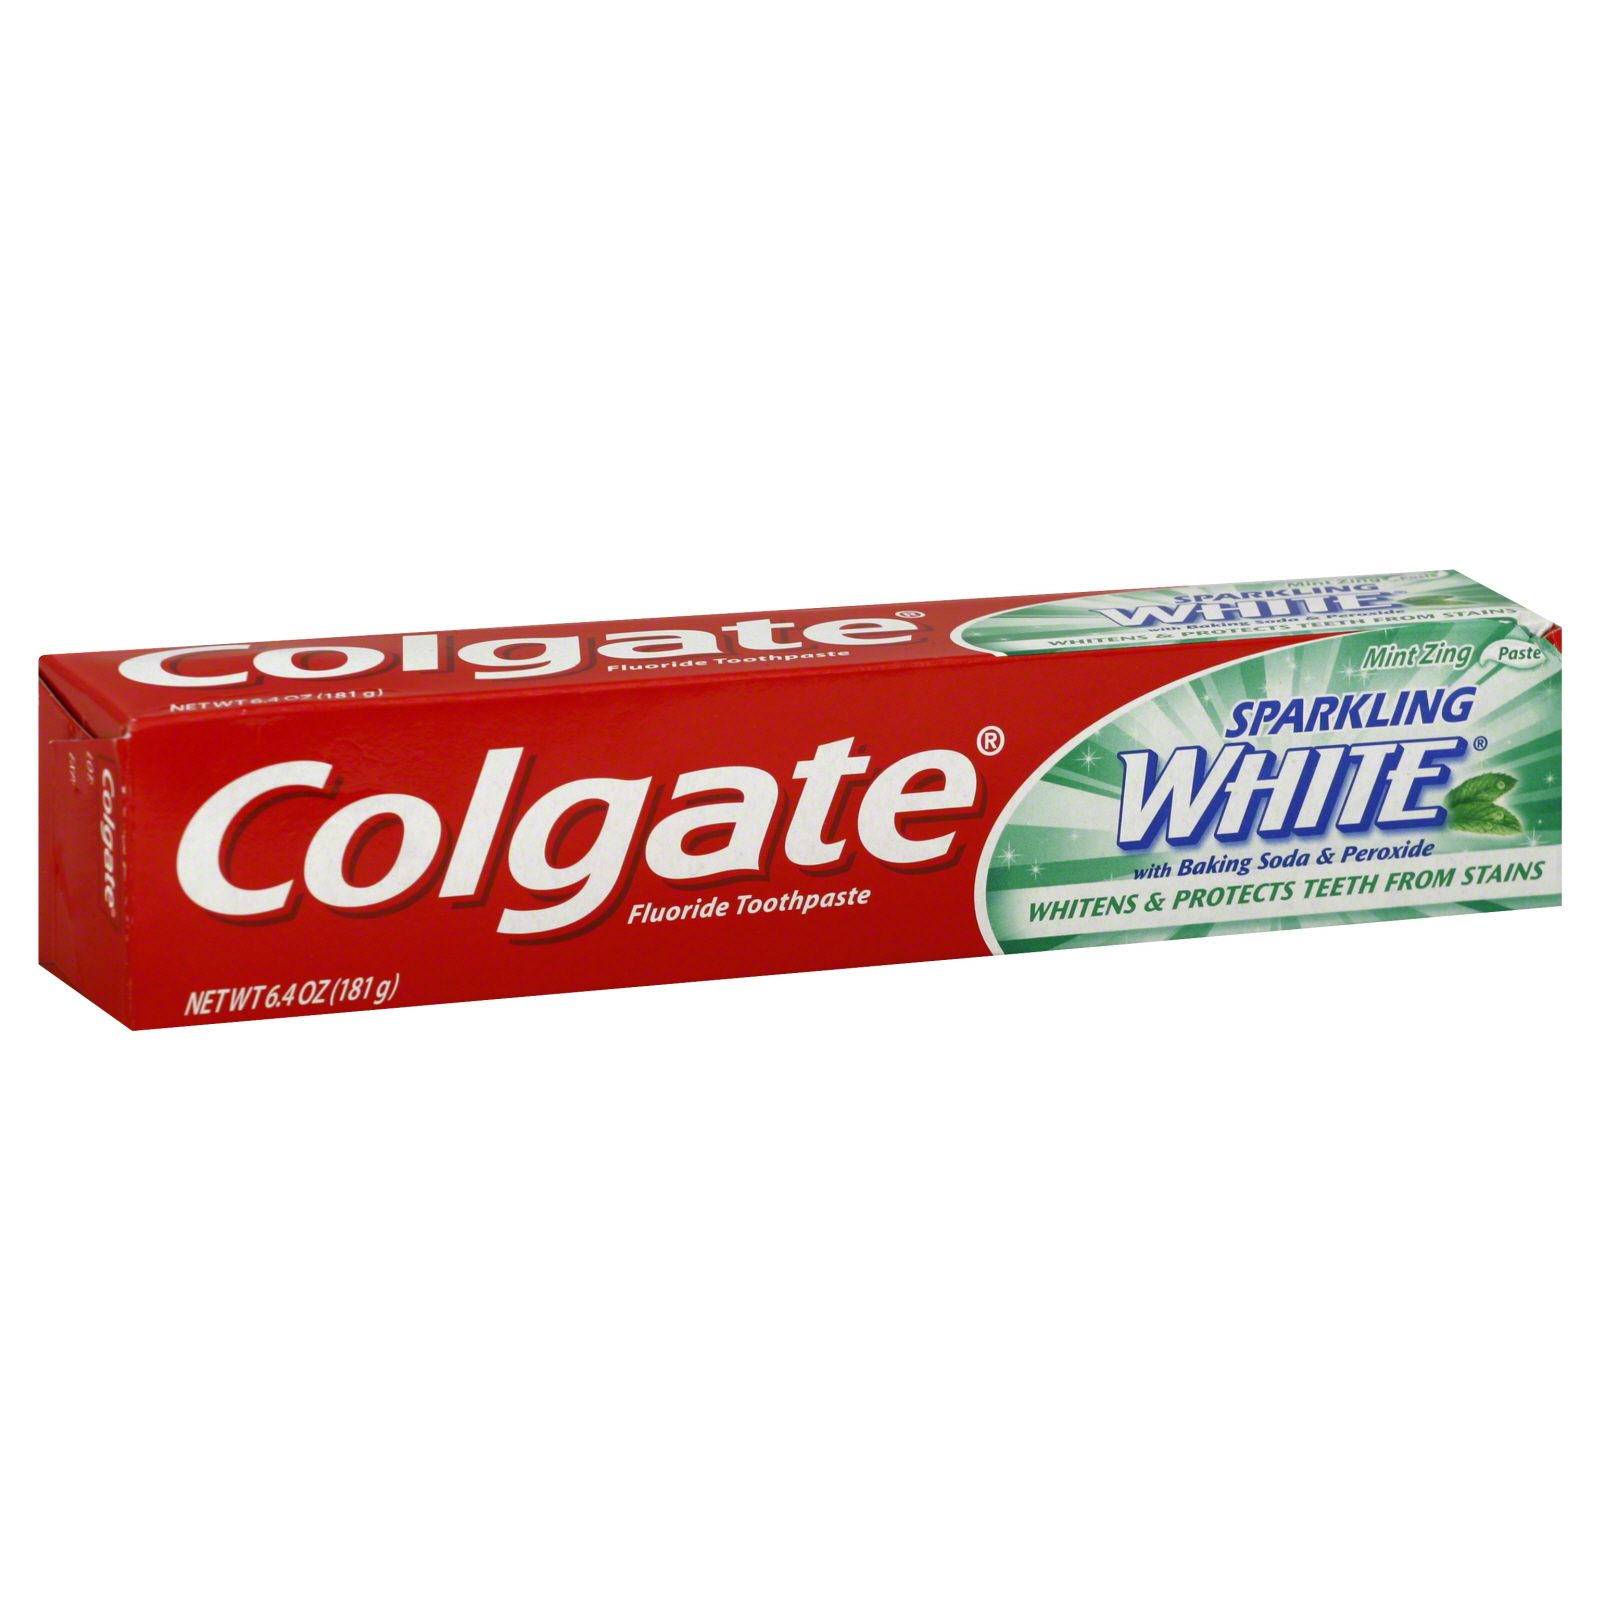 Colgate-Palmolive Sparkling White Fluoride Toothpaste, Mint Zing Paste, 6.4 oz (181 g)